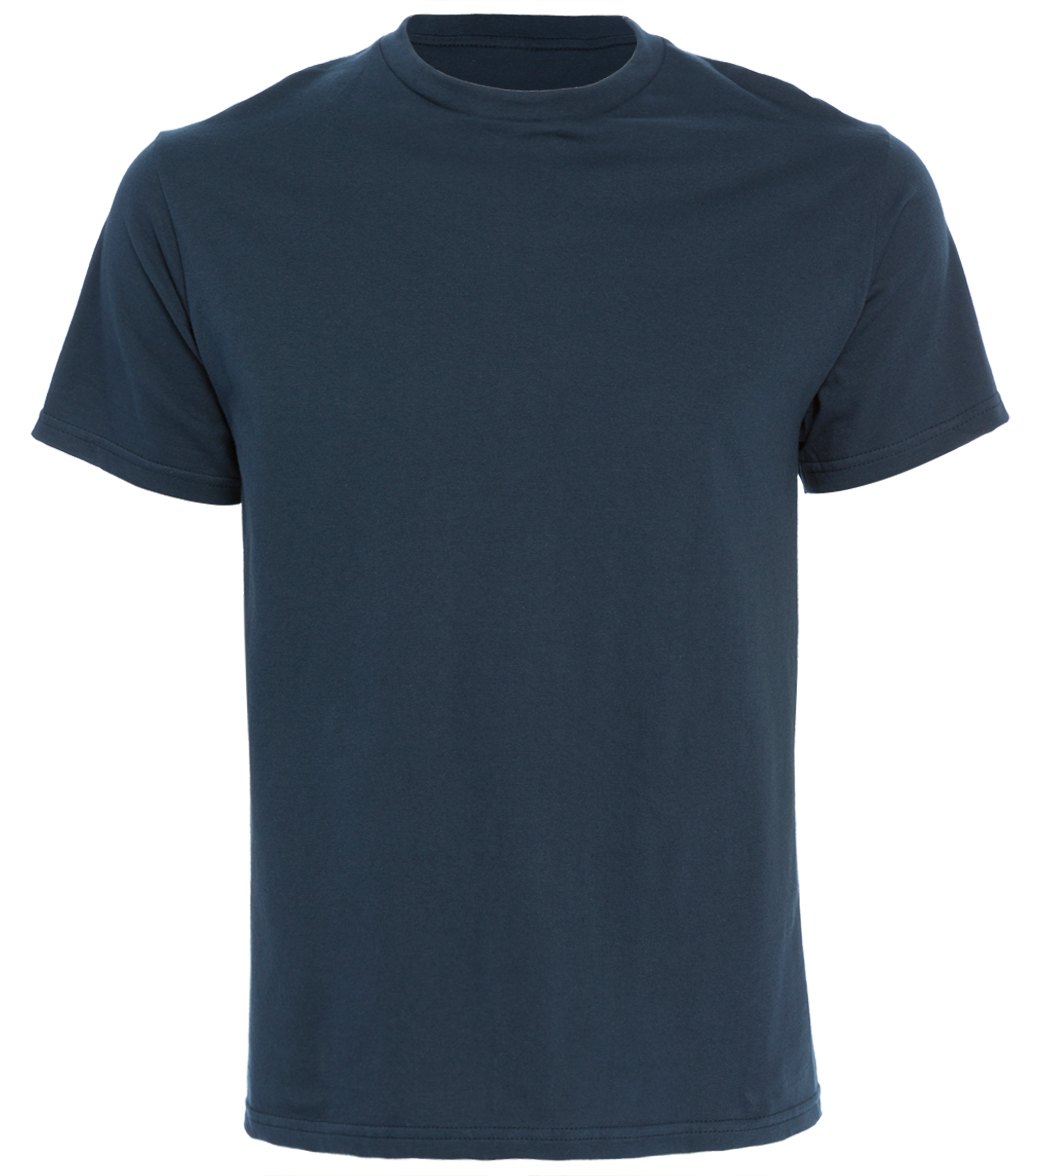 Men's Cotton Short Sleeve T-Shirt - Navy Small - Swimoutlet.com